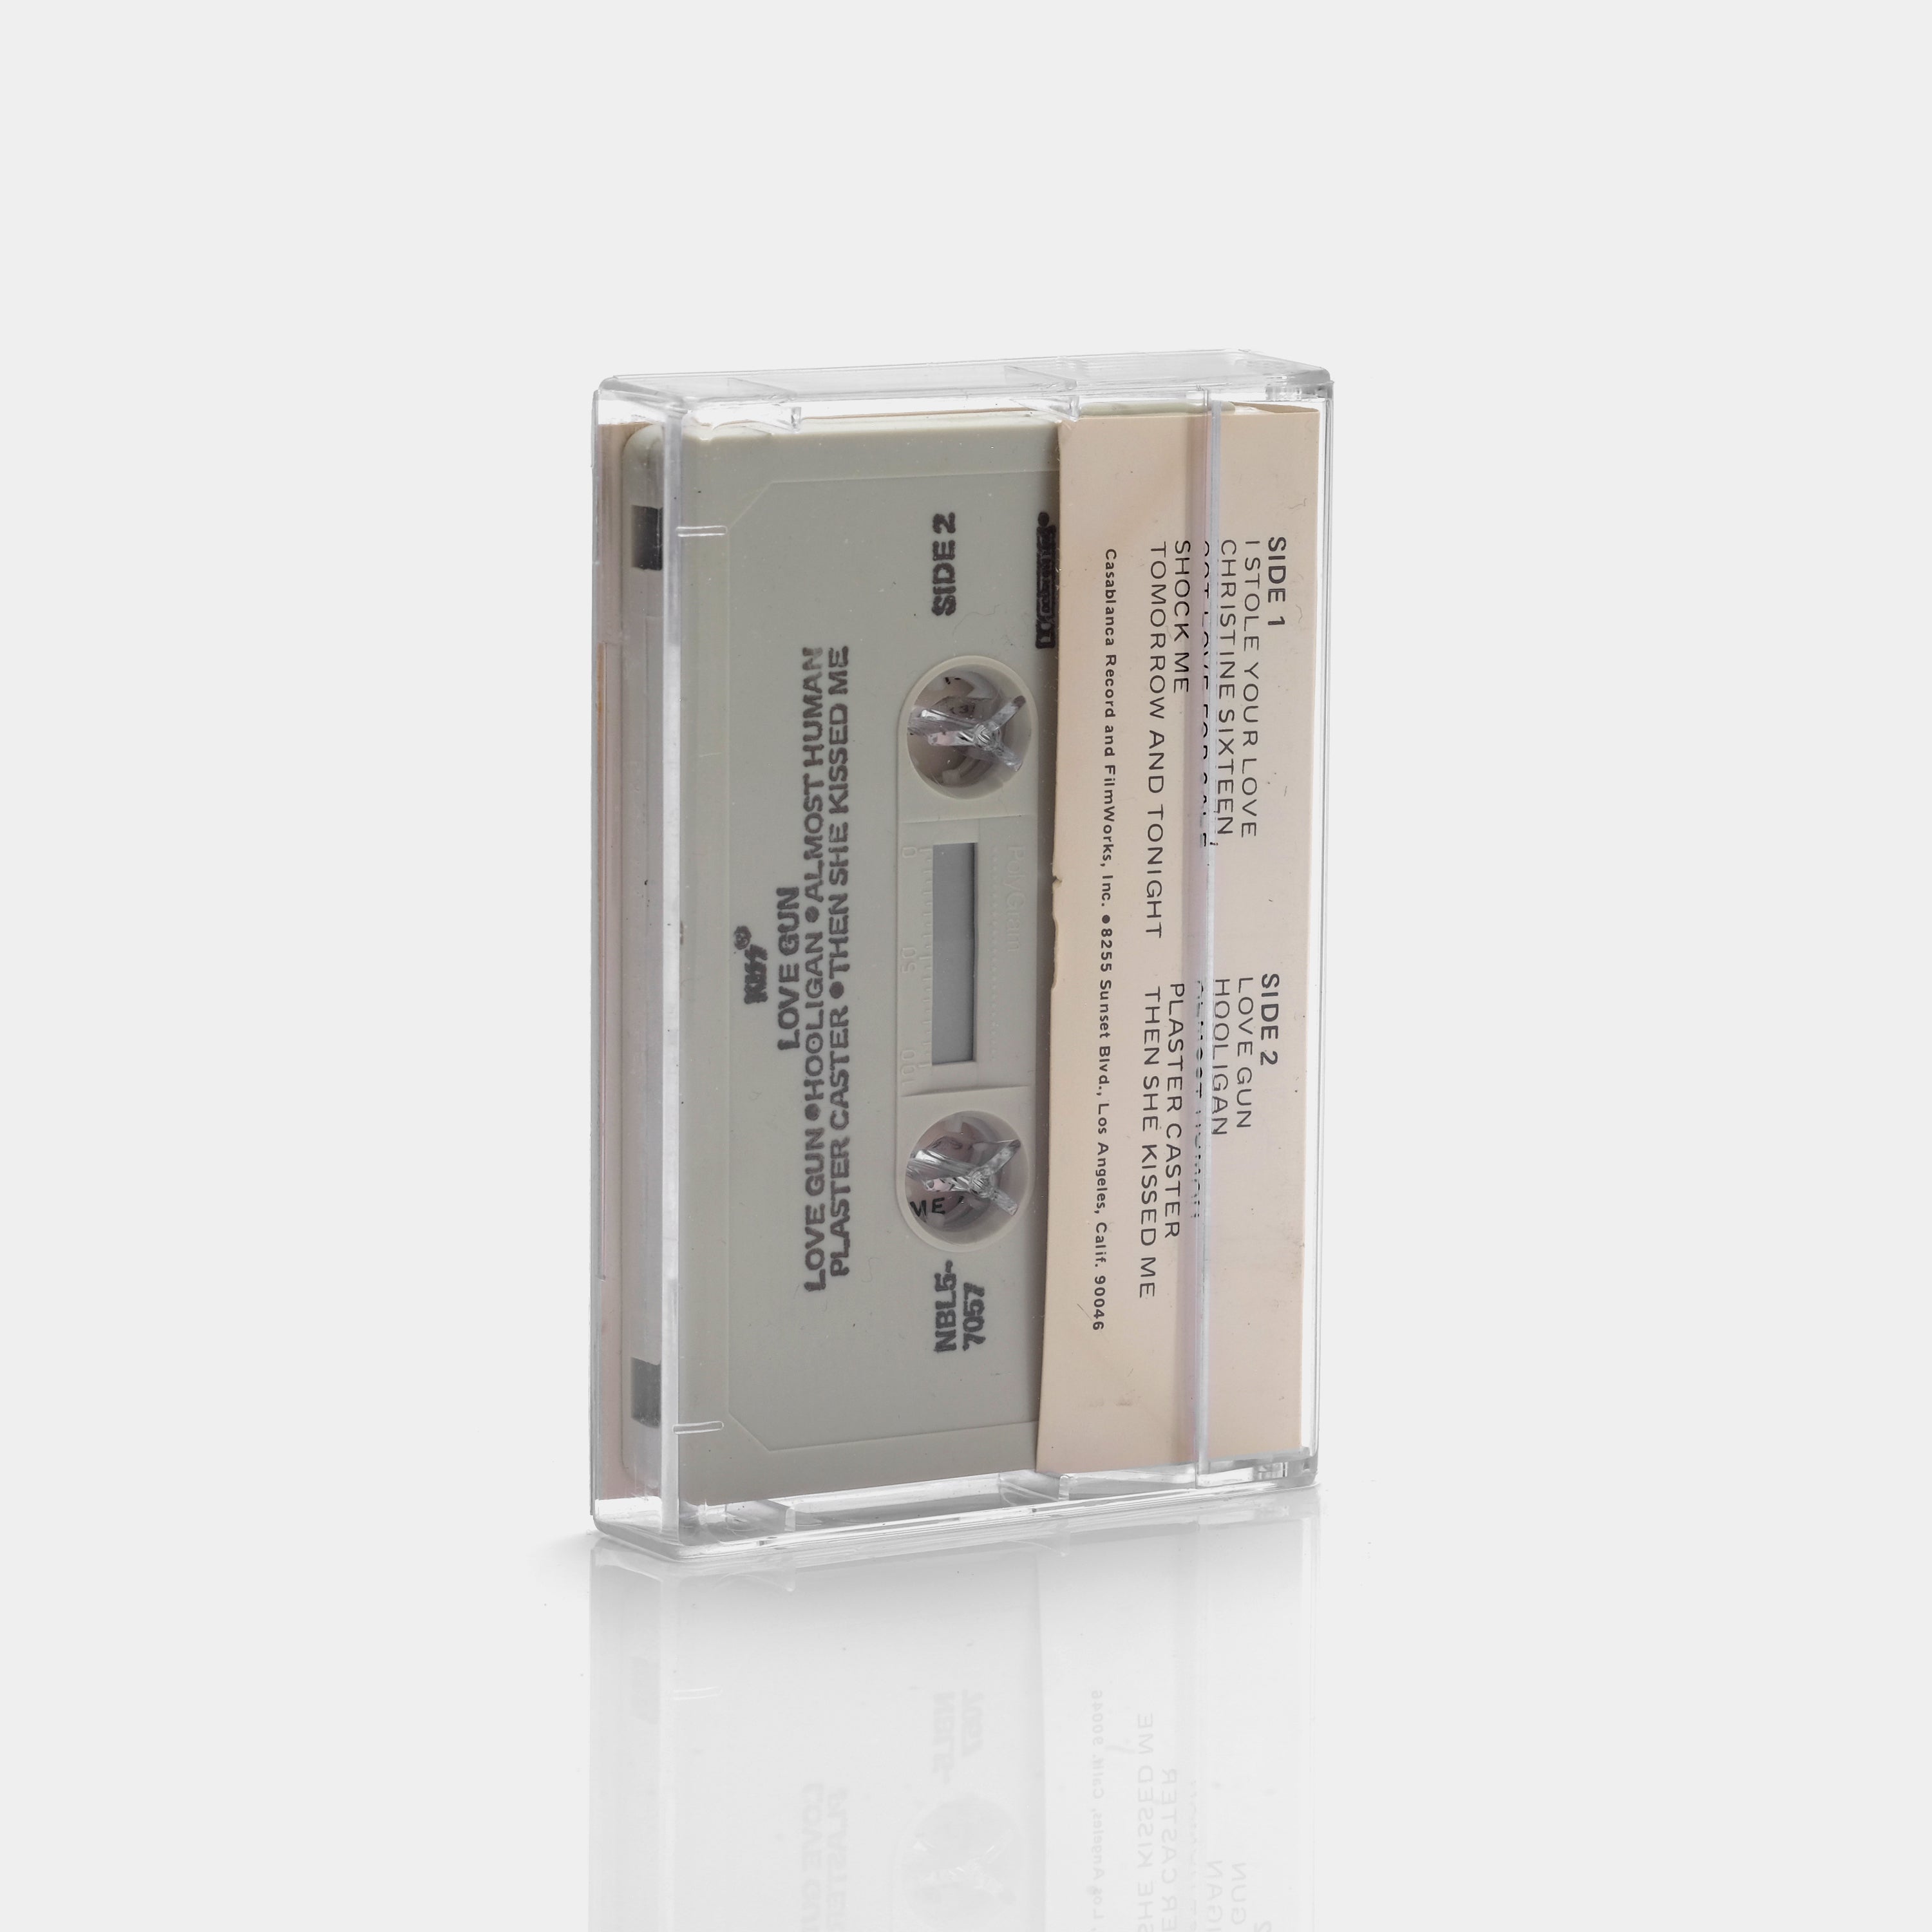 KISS - Love Gun Cassette Tape